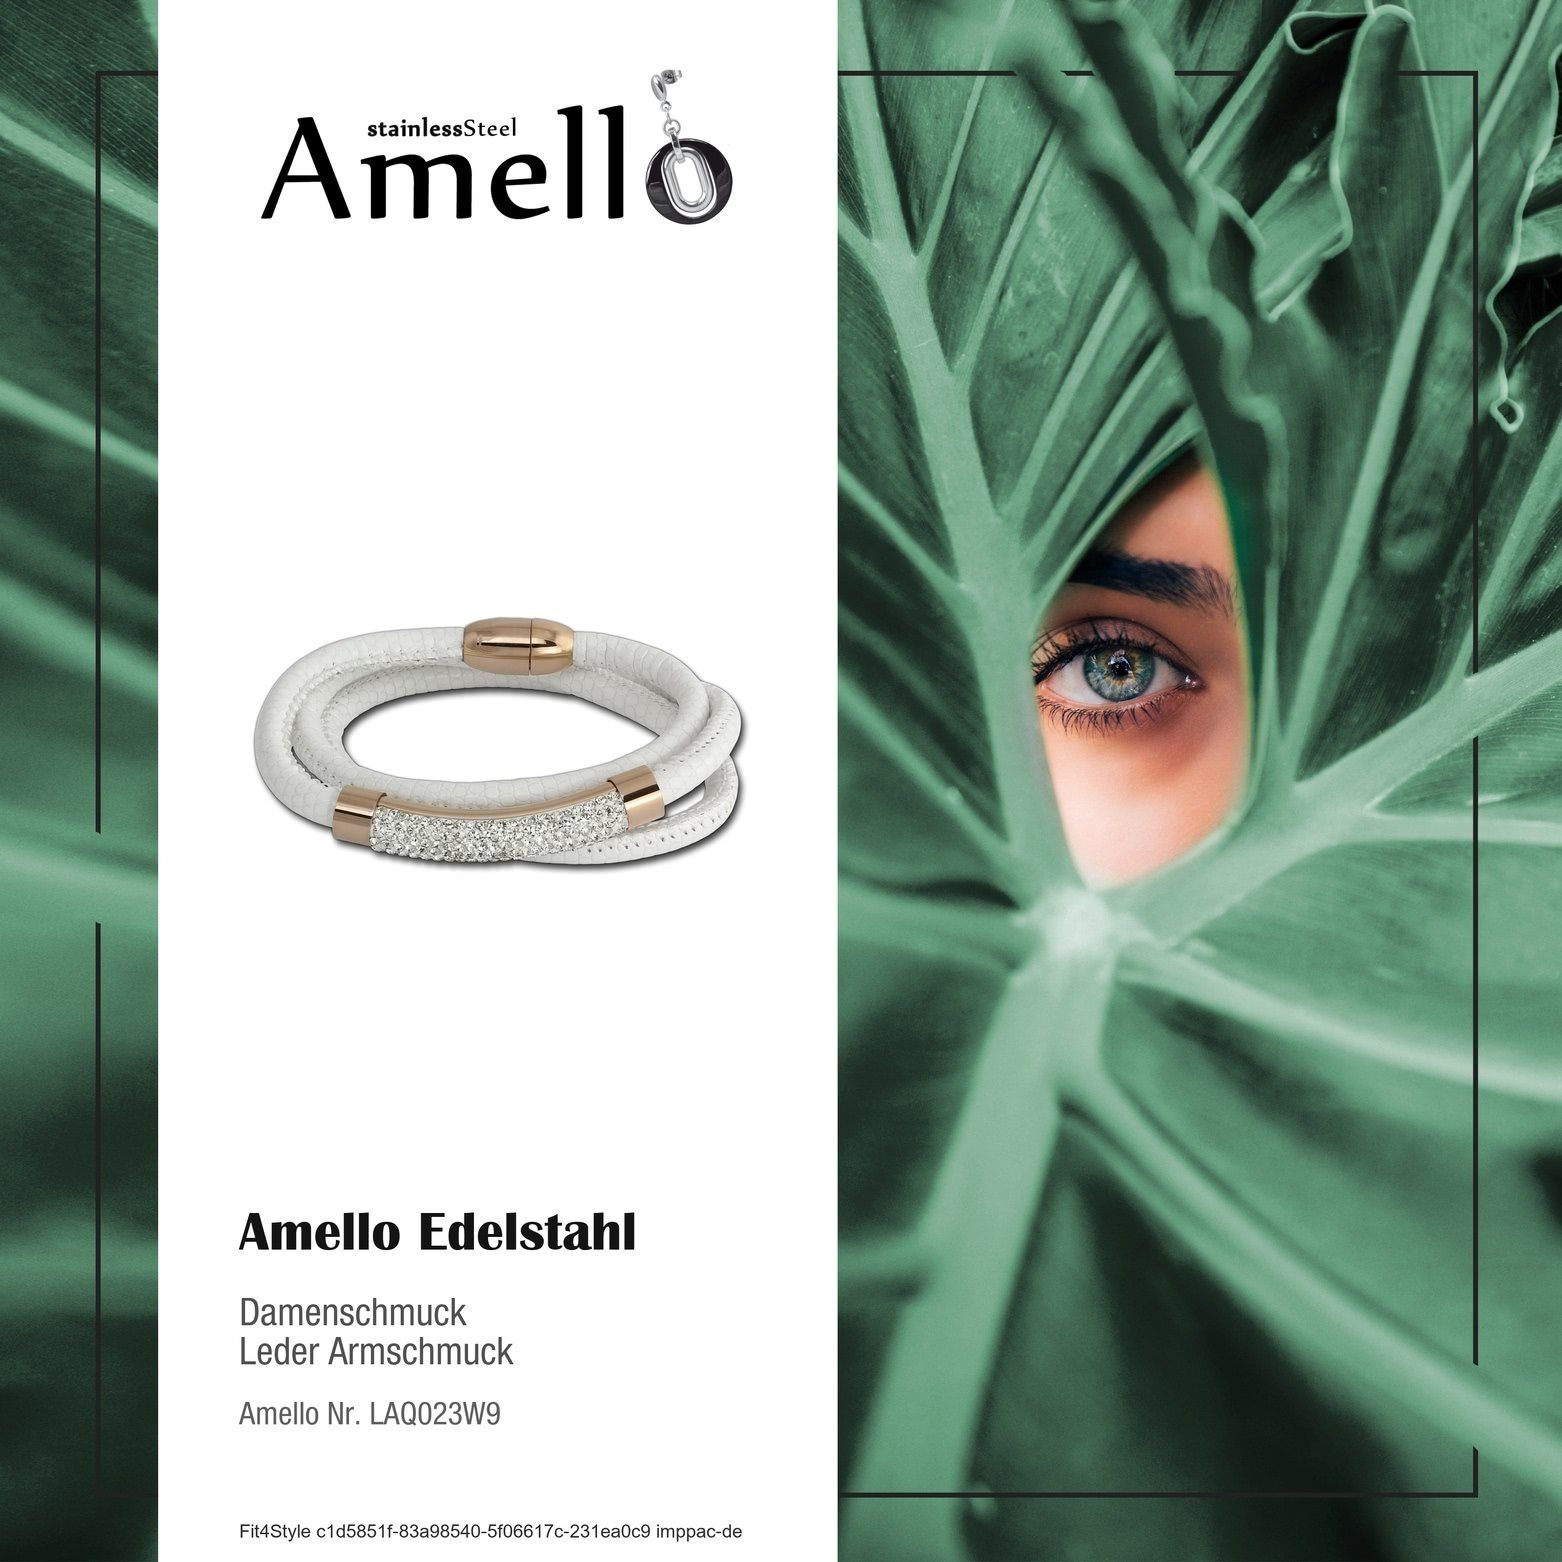 Amello Edelstahlarmband Armband (Armband), Zirkonia F (Roségold vergoldet Amello Steel), Damen Leder (Stainless Damen 333), Armband Edelstahl